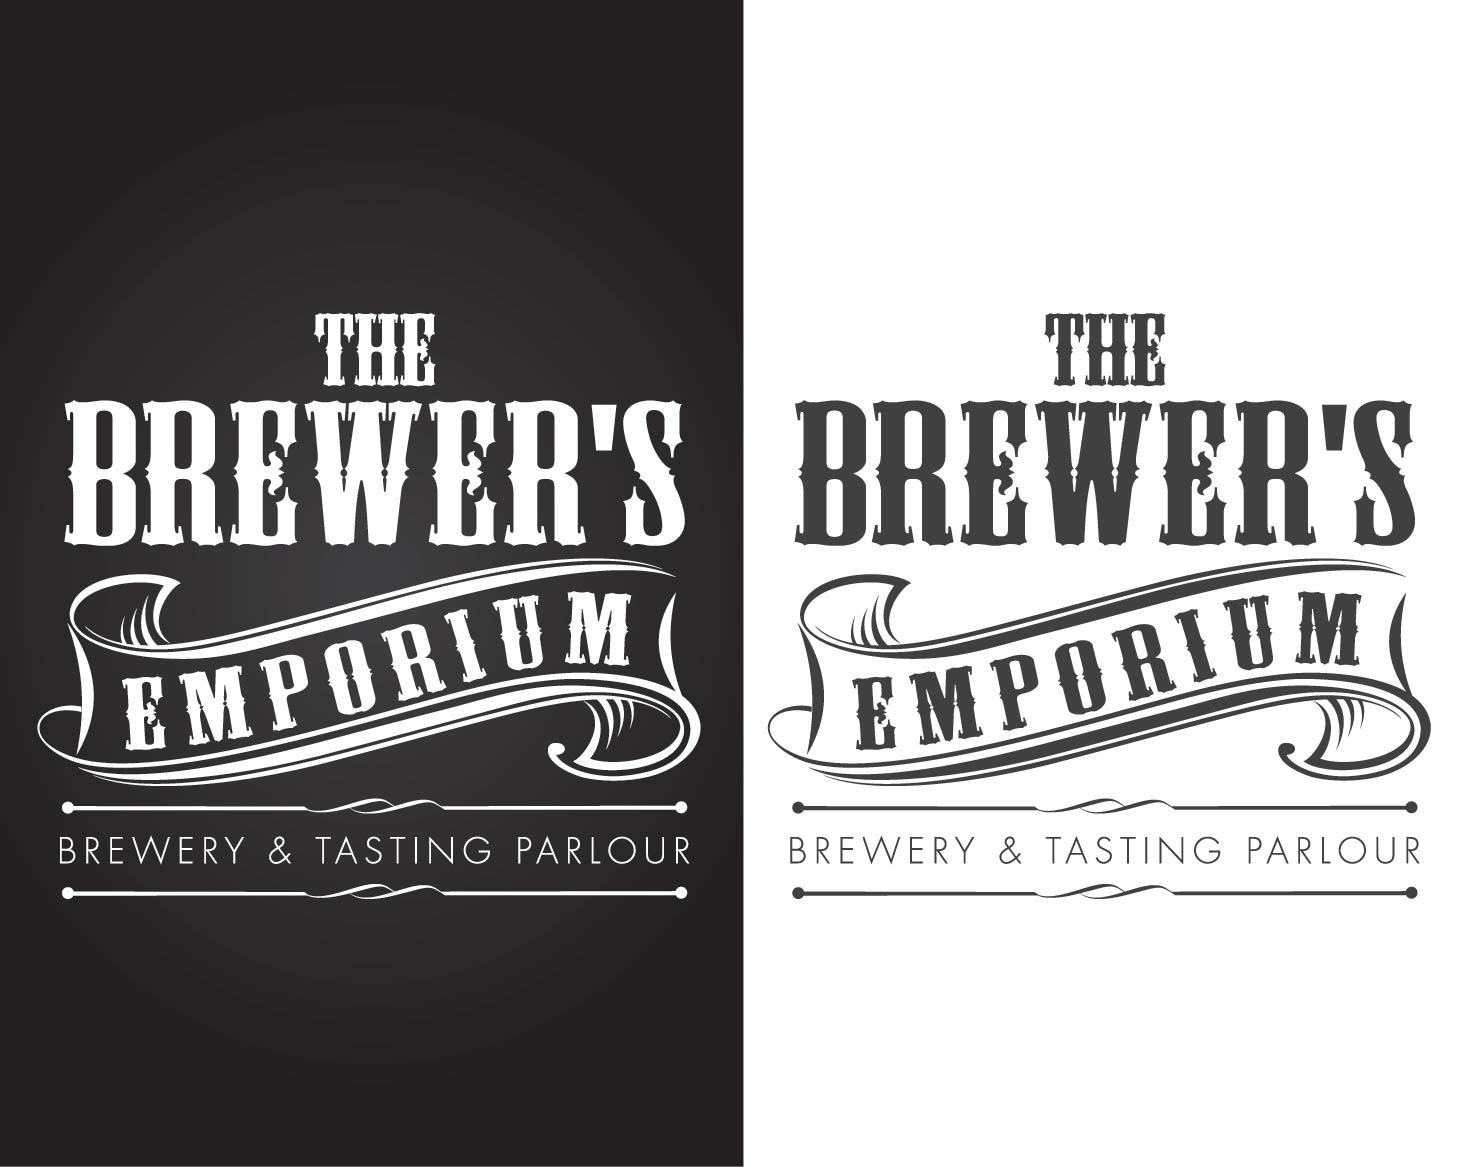 Logo Design entry 1047422 submitted by bocaj.ecyoj to the Logo Design for The Brewer's Emporium run by BrewersEmporium